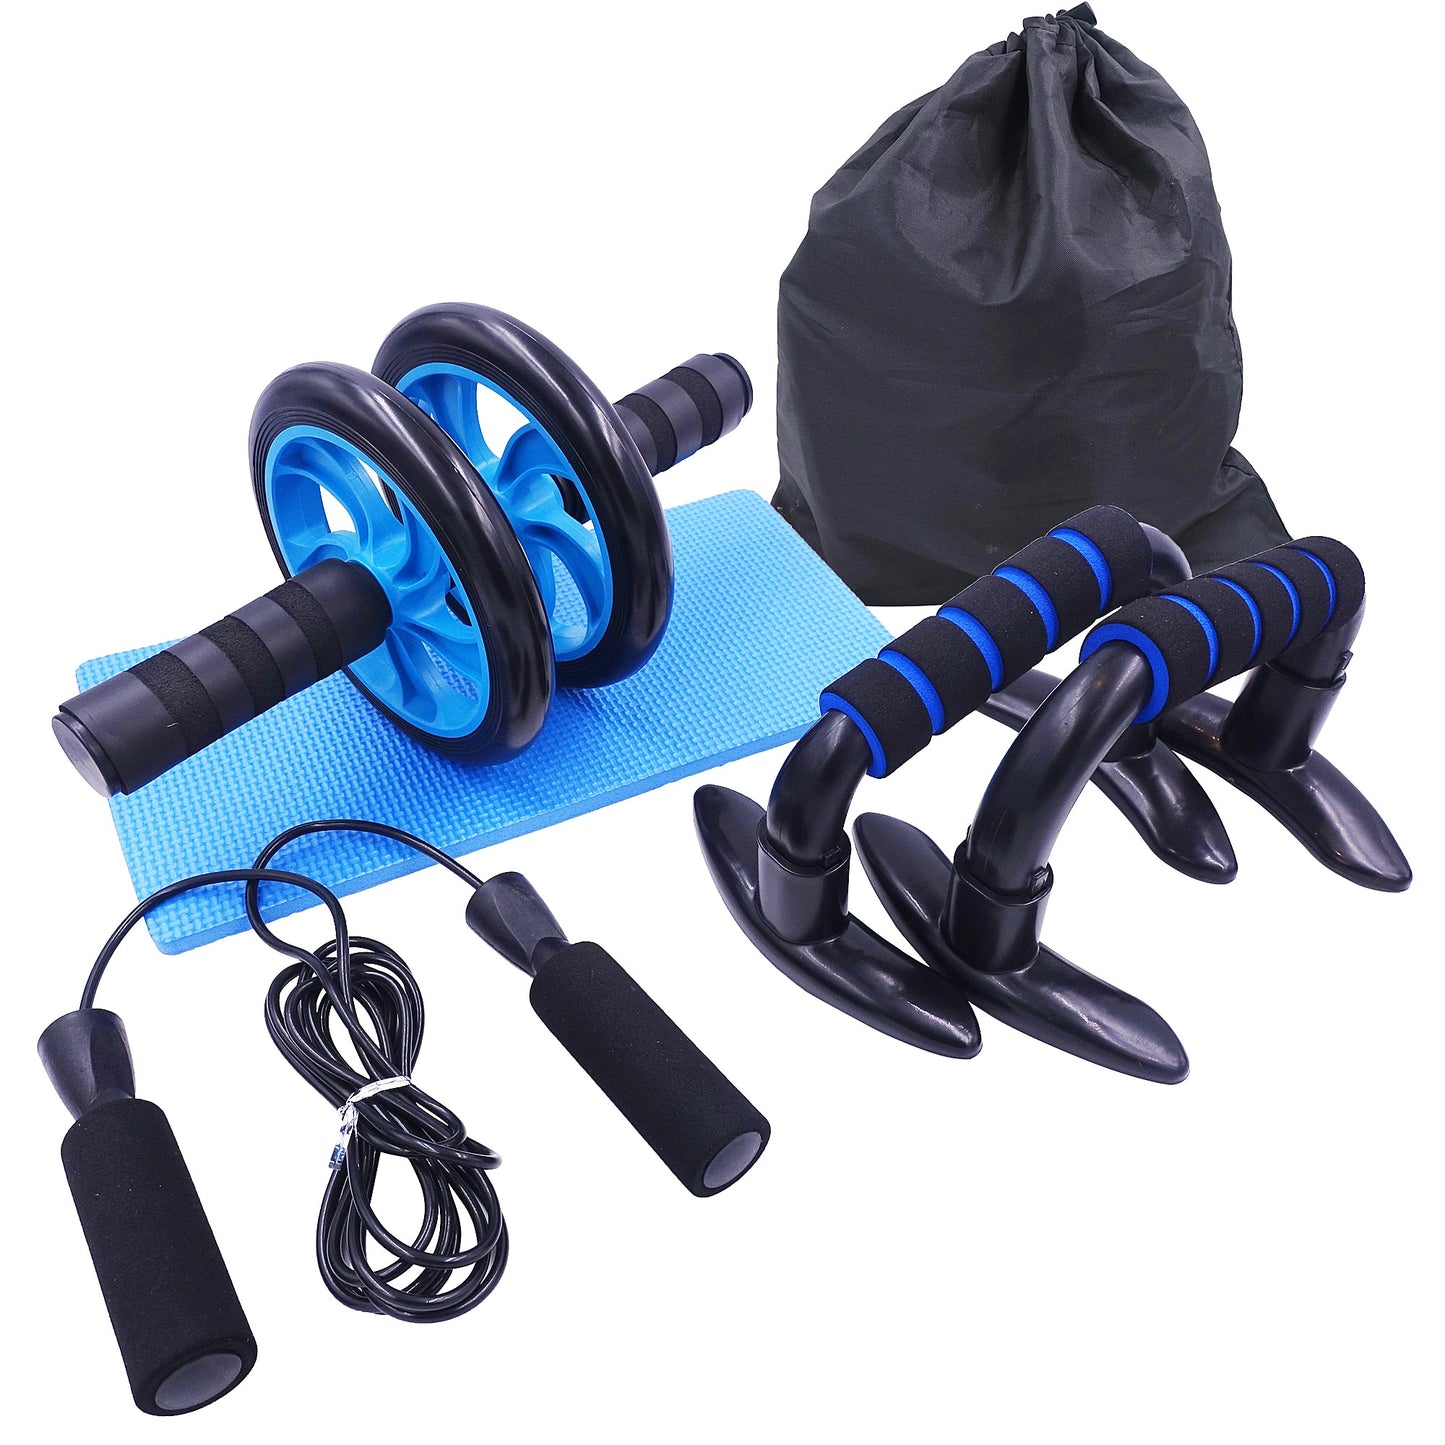 AB Roller Kit - Push Up Bars - Adjustable Skipping Jump Rope | Home Workout Set